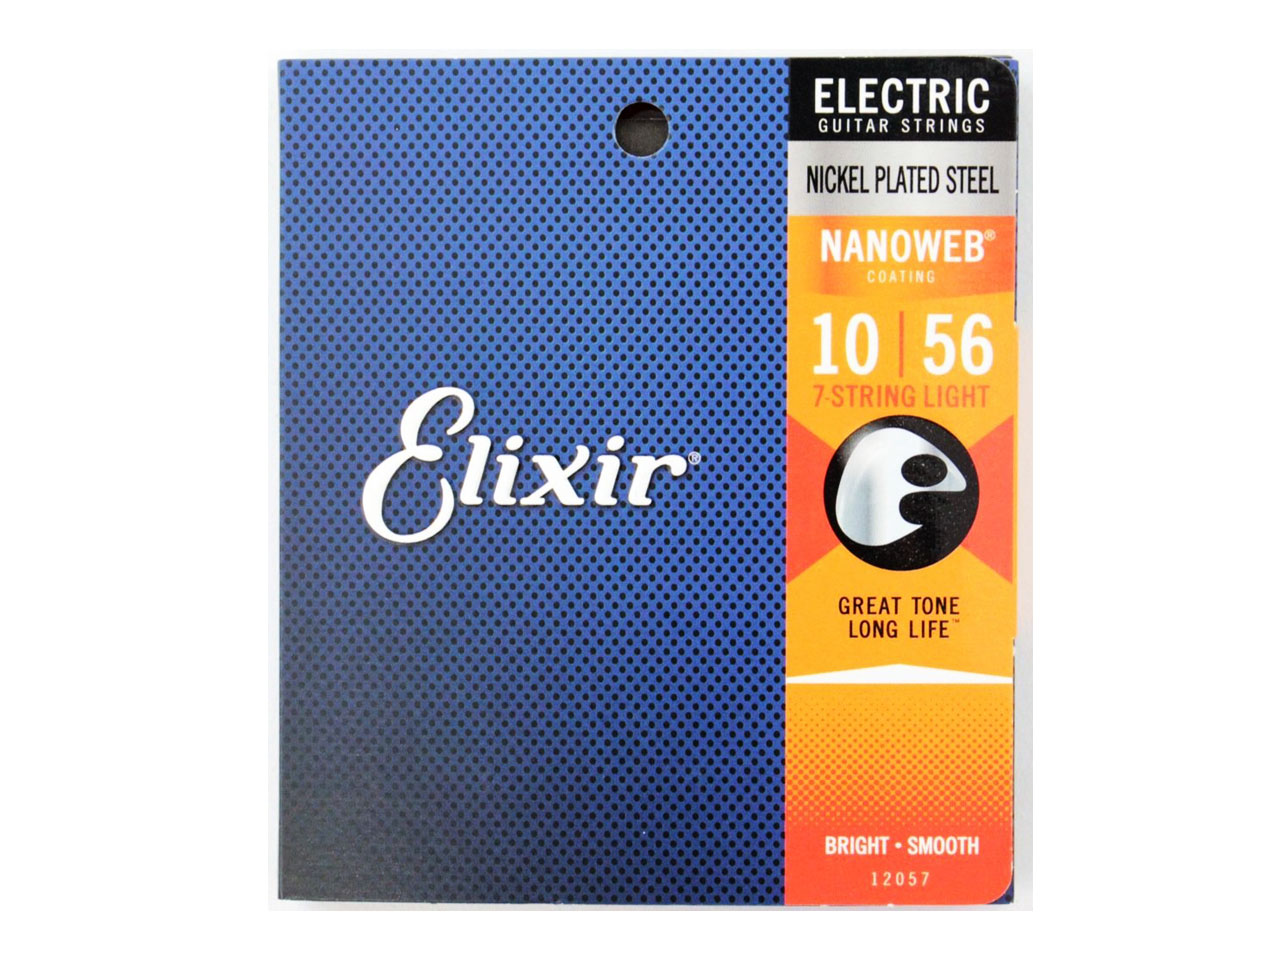 Elixir®(エリクサー) NANOWEB 7-STRING LIGHT [010-056 #12057] (エレキギター弦/7弦用)